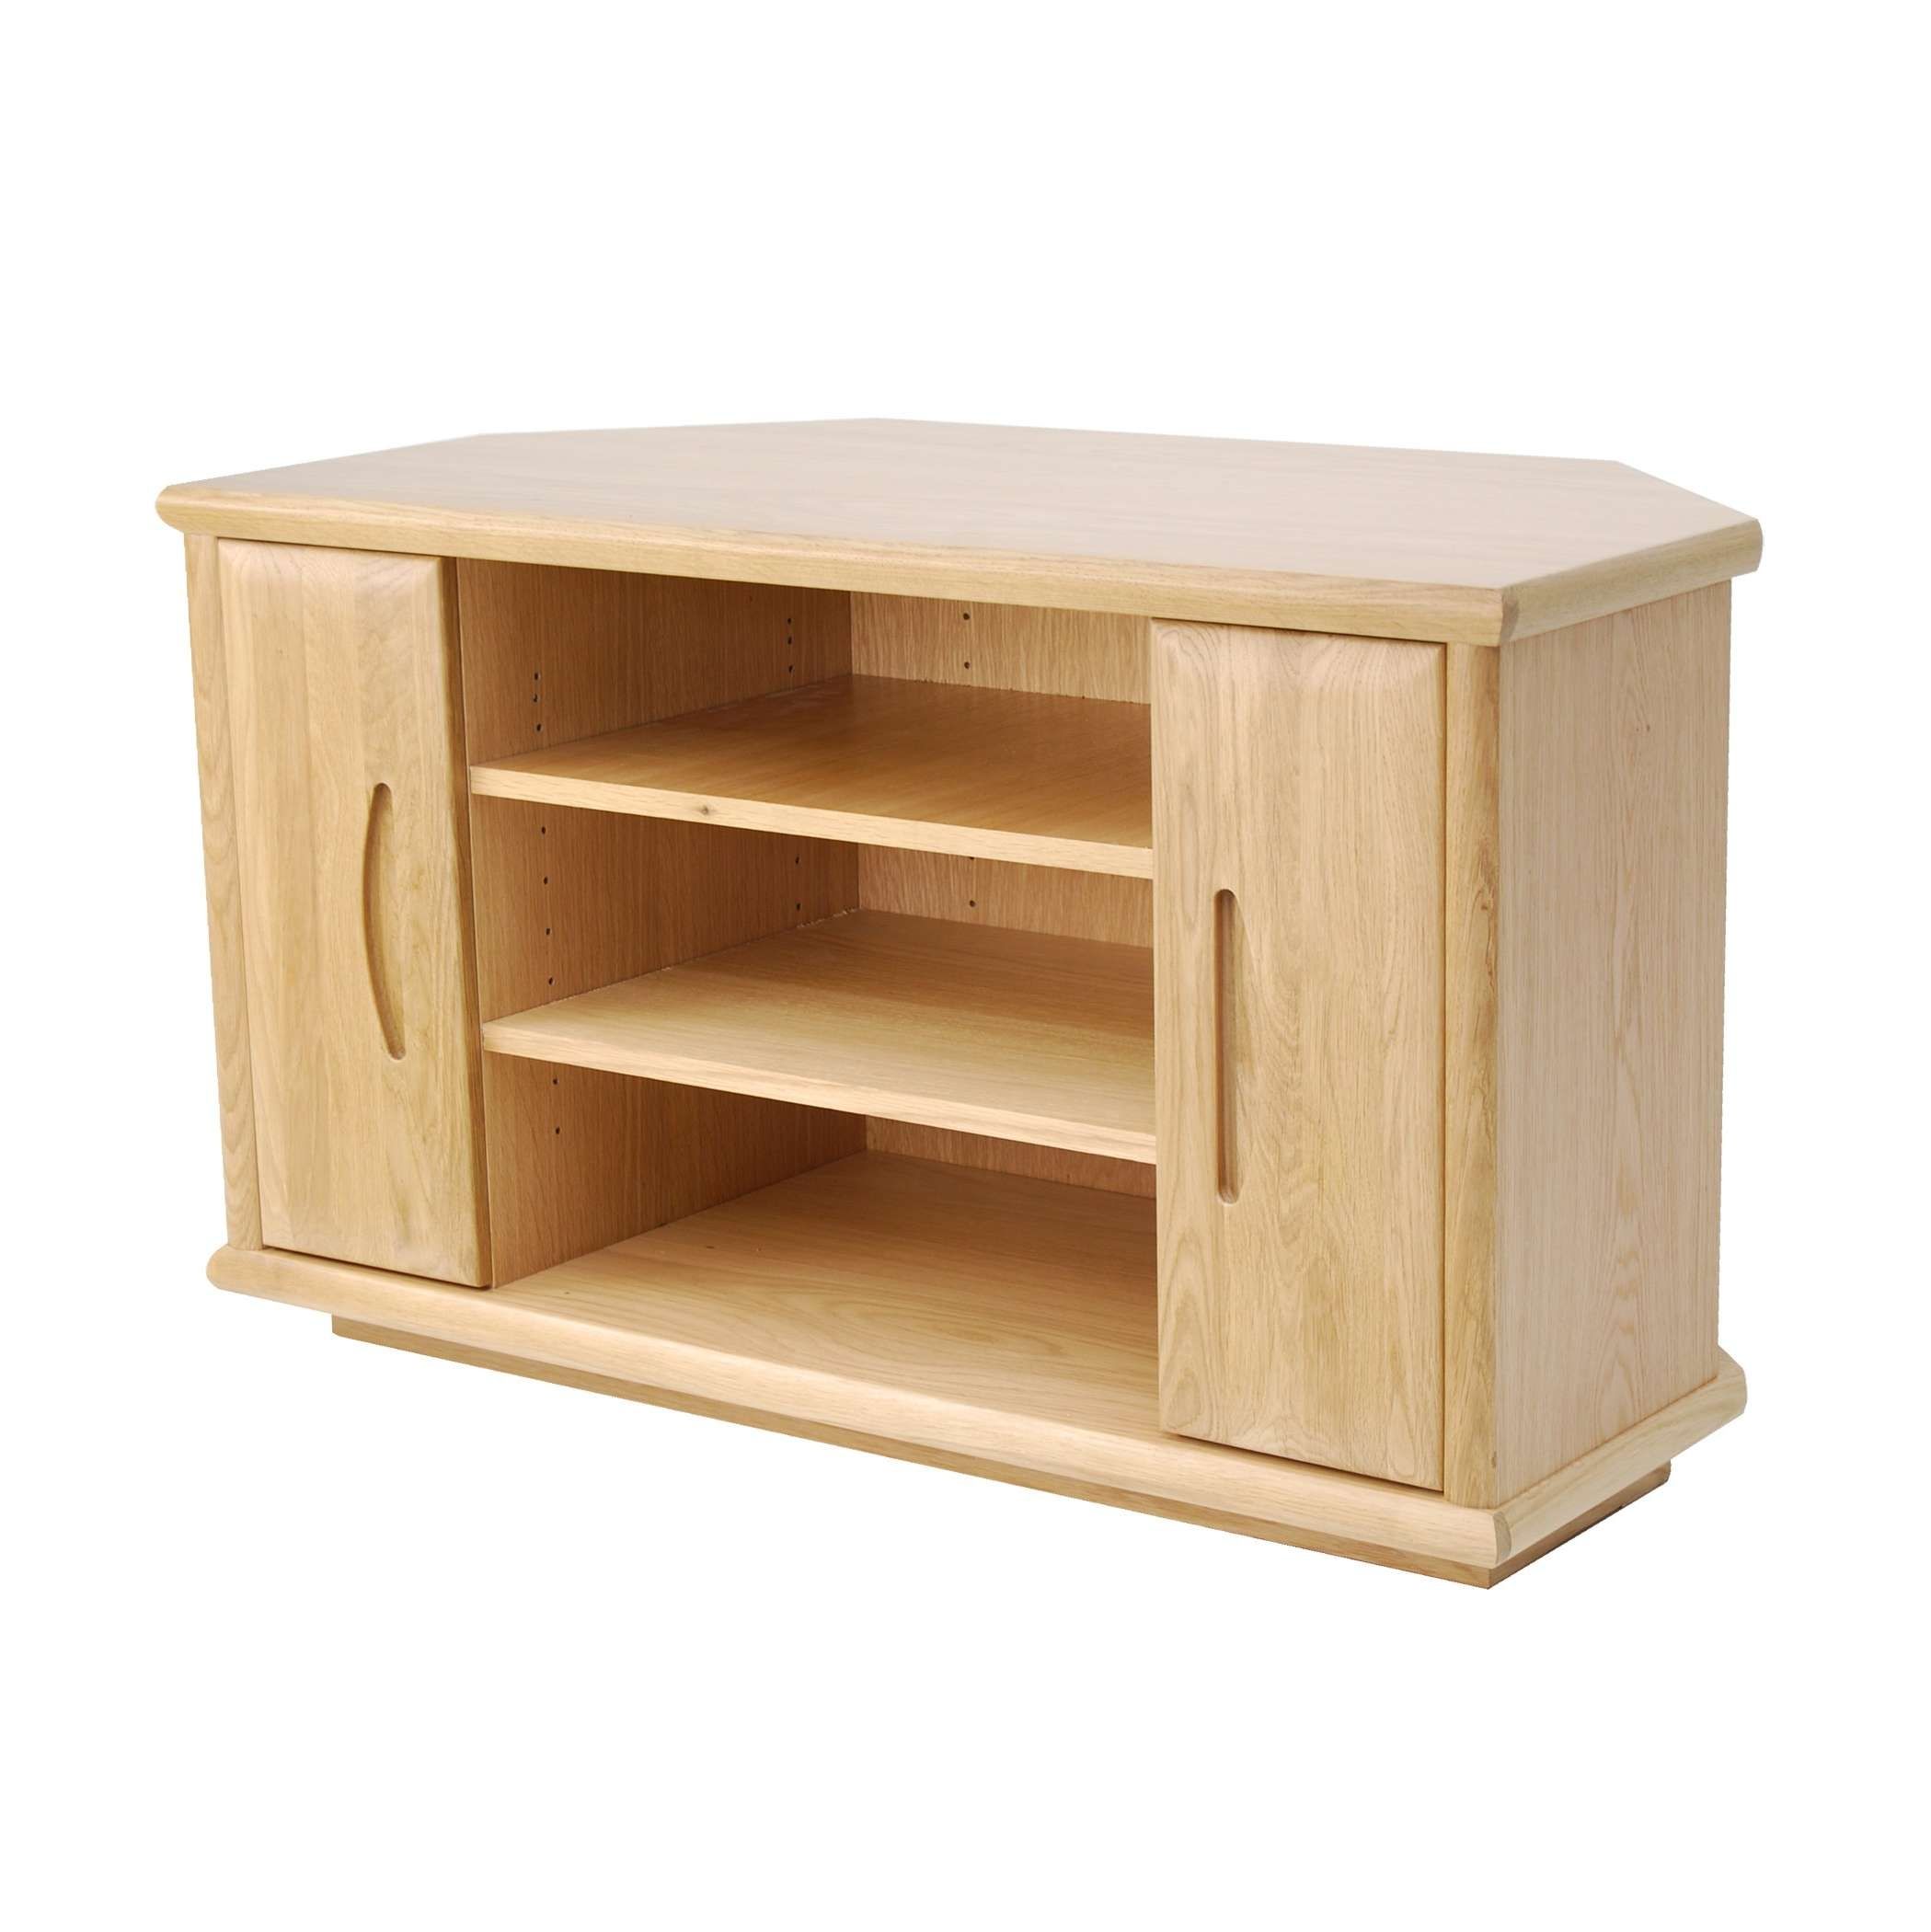 Oak Corner Tv Stand | Gola Furniture Uk With Dark Wood Corner Tv Cabinets (View 12 of 20)